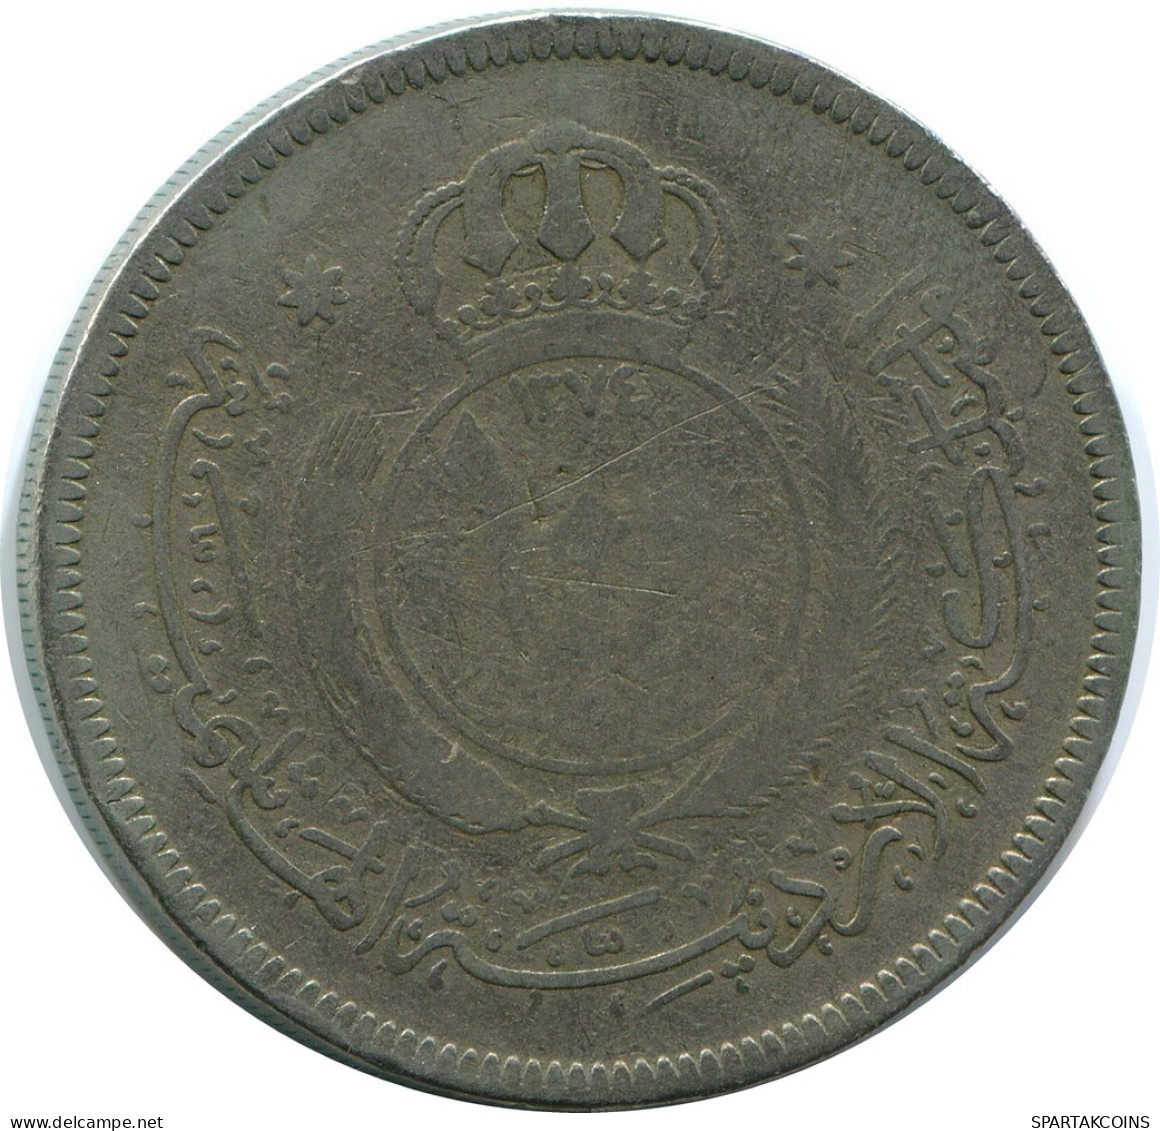 1 DIRHAM / 100 FILS 1955 JORDAN Coin #AP098.U.A - Giordania